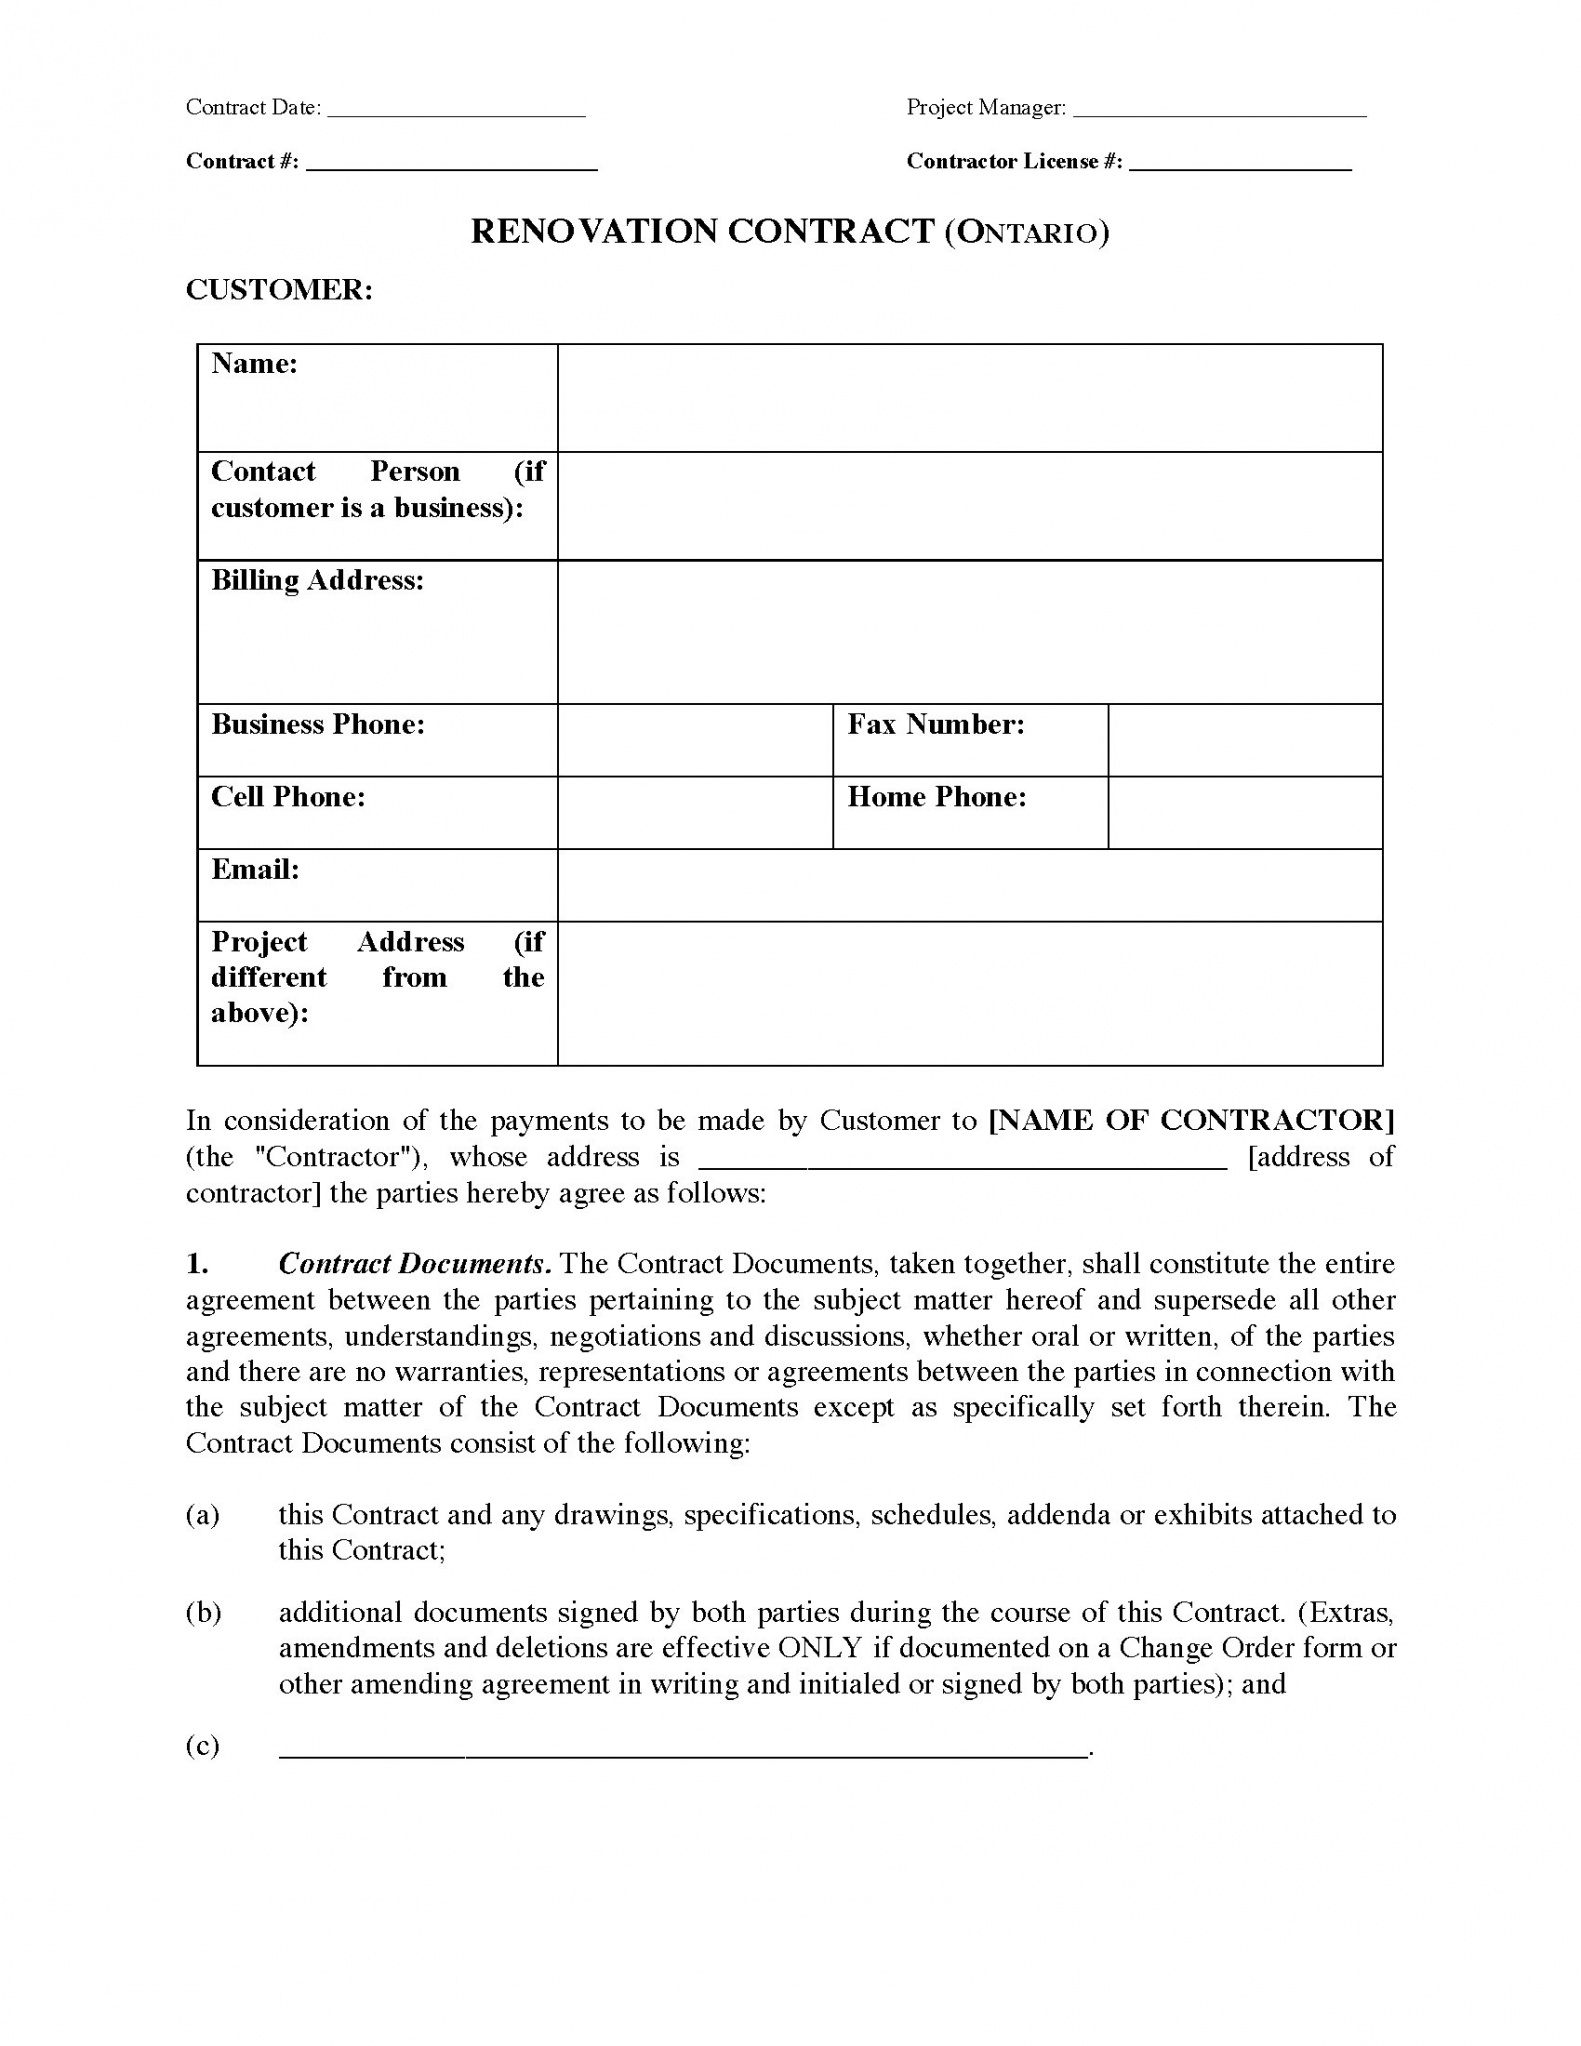 printable ontario renovation contract home renovation contract template word